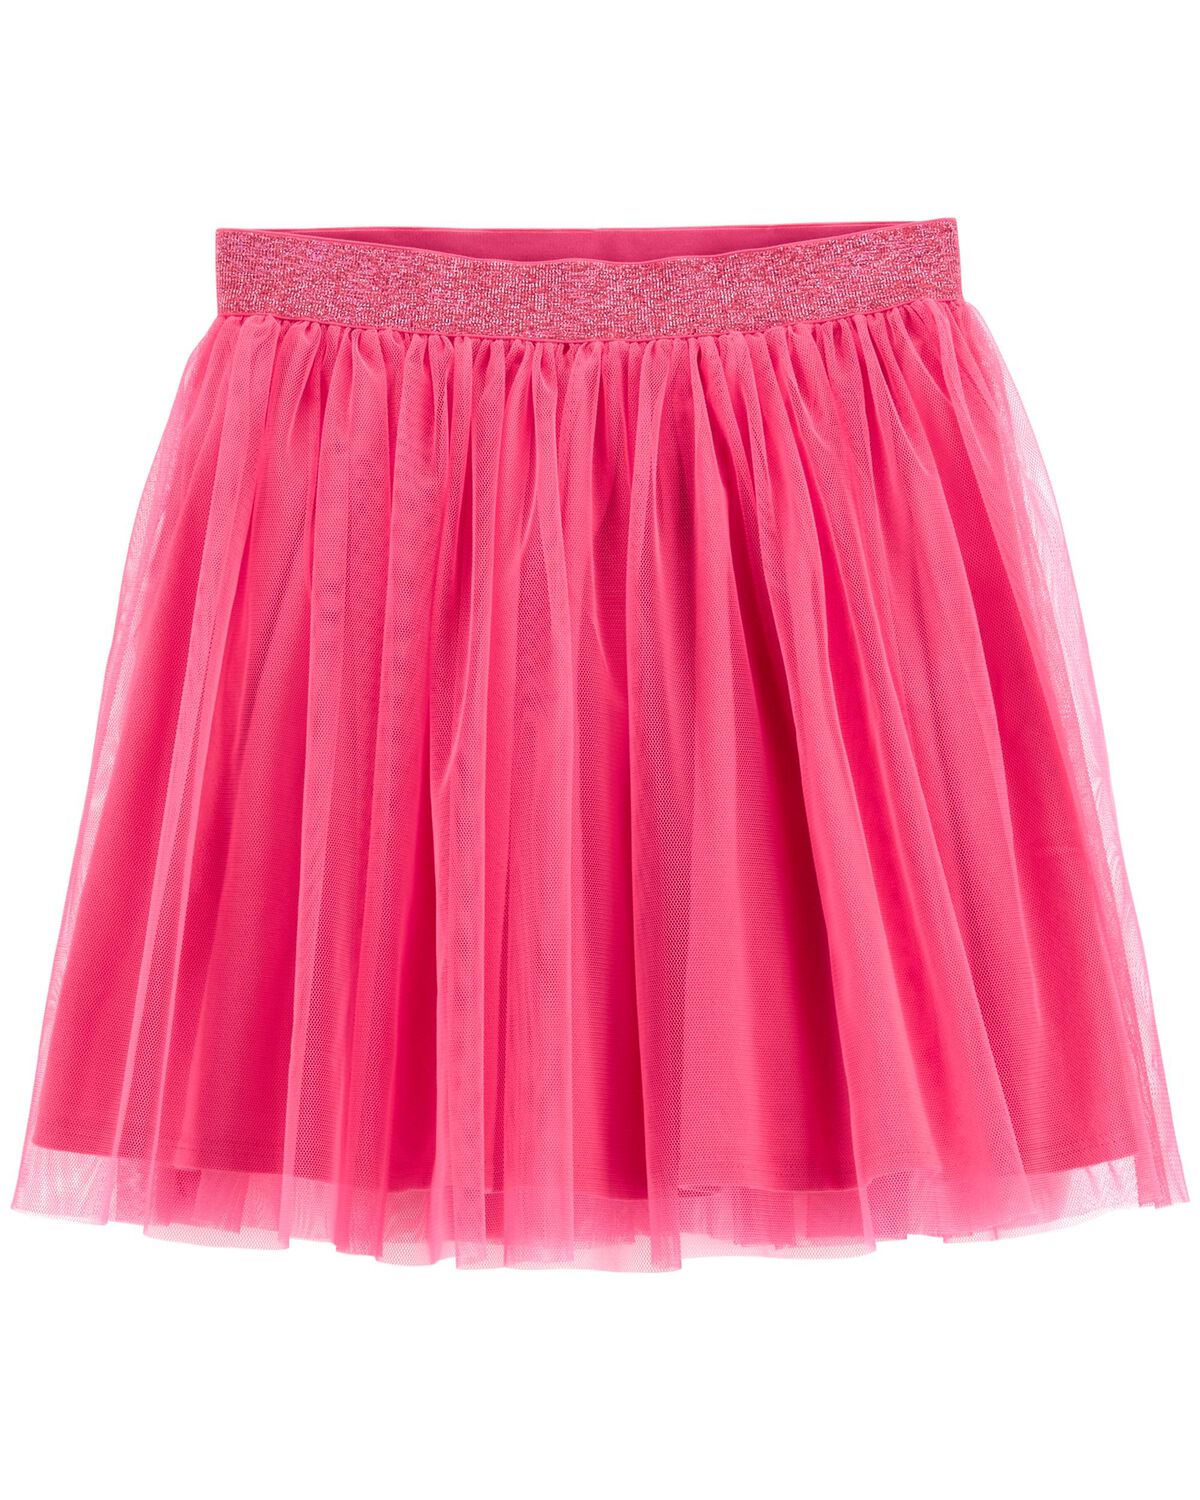 Tulle Skirt, Pink, hi-res